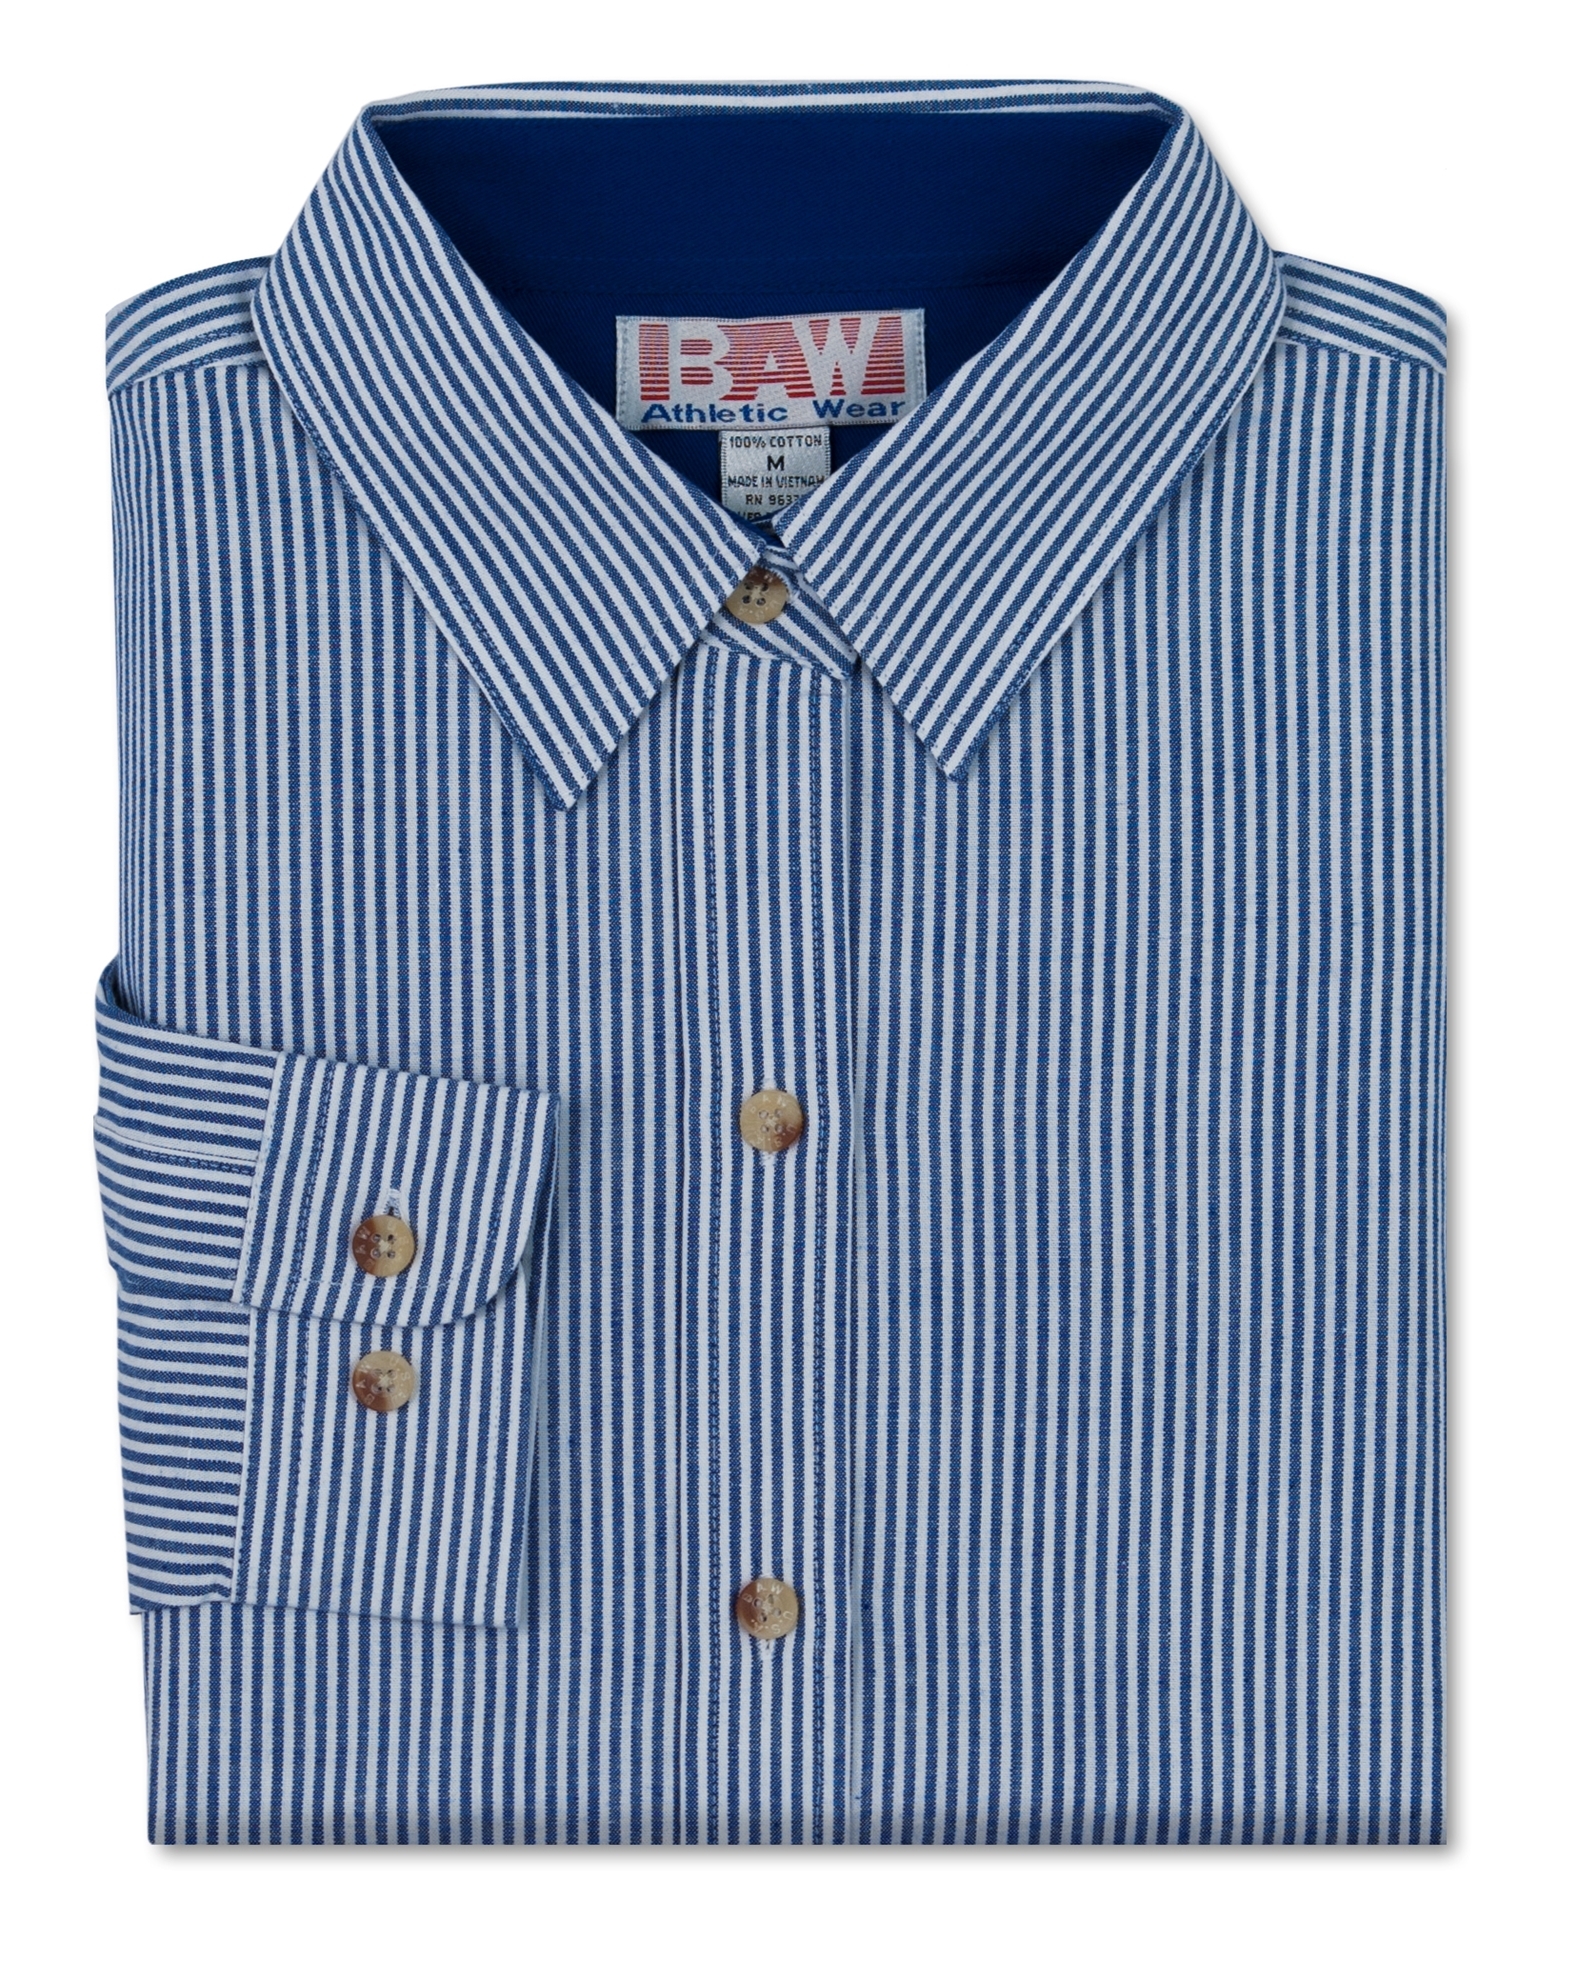 BAW Athletic Wear G451L - Ladies Classic Stripe Gingham Shirt